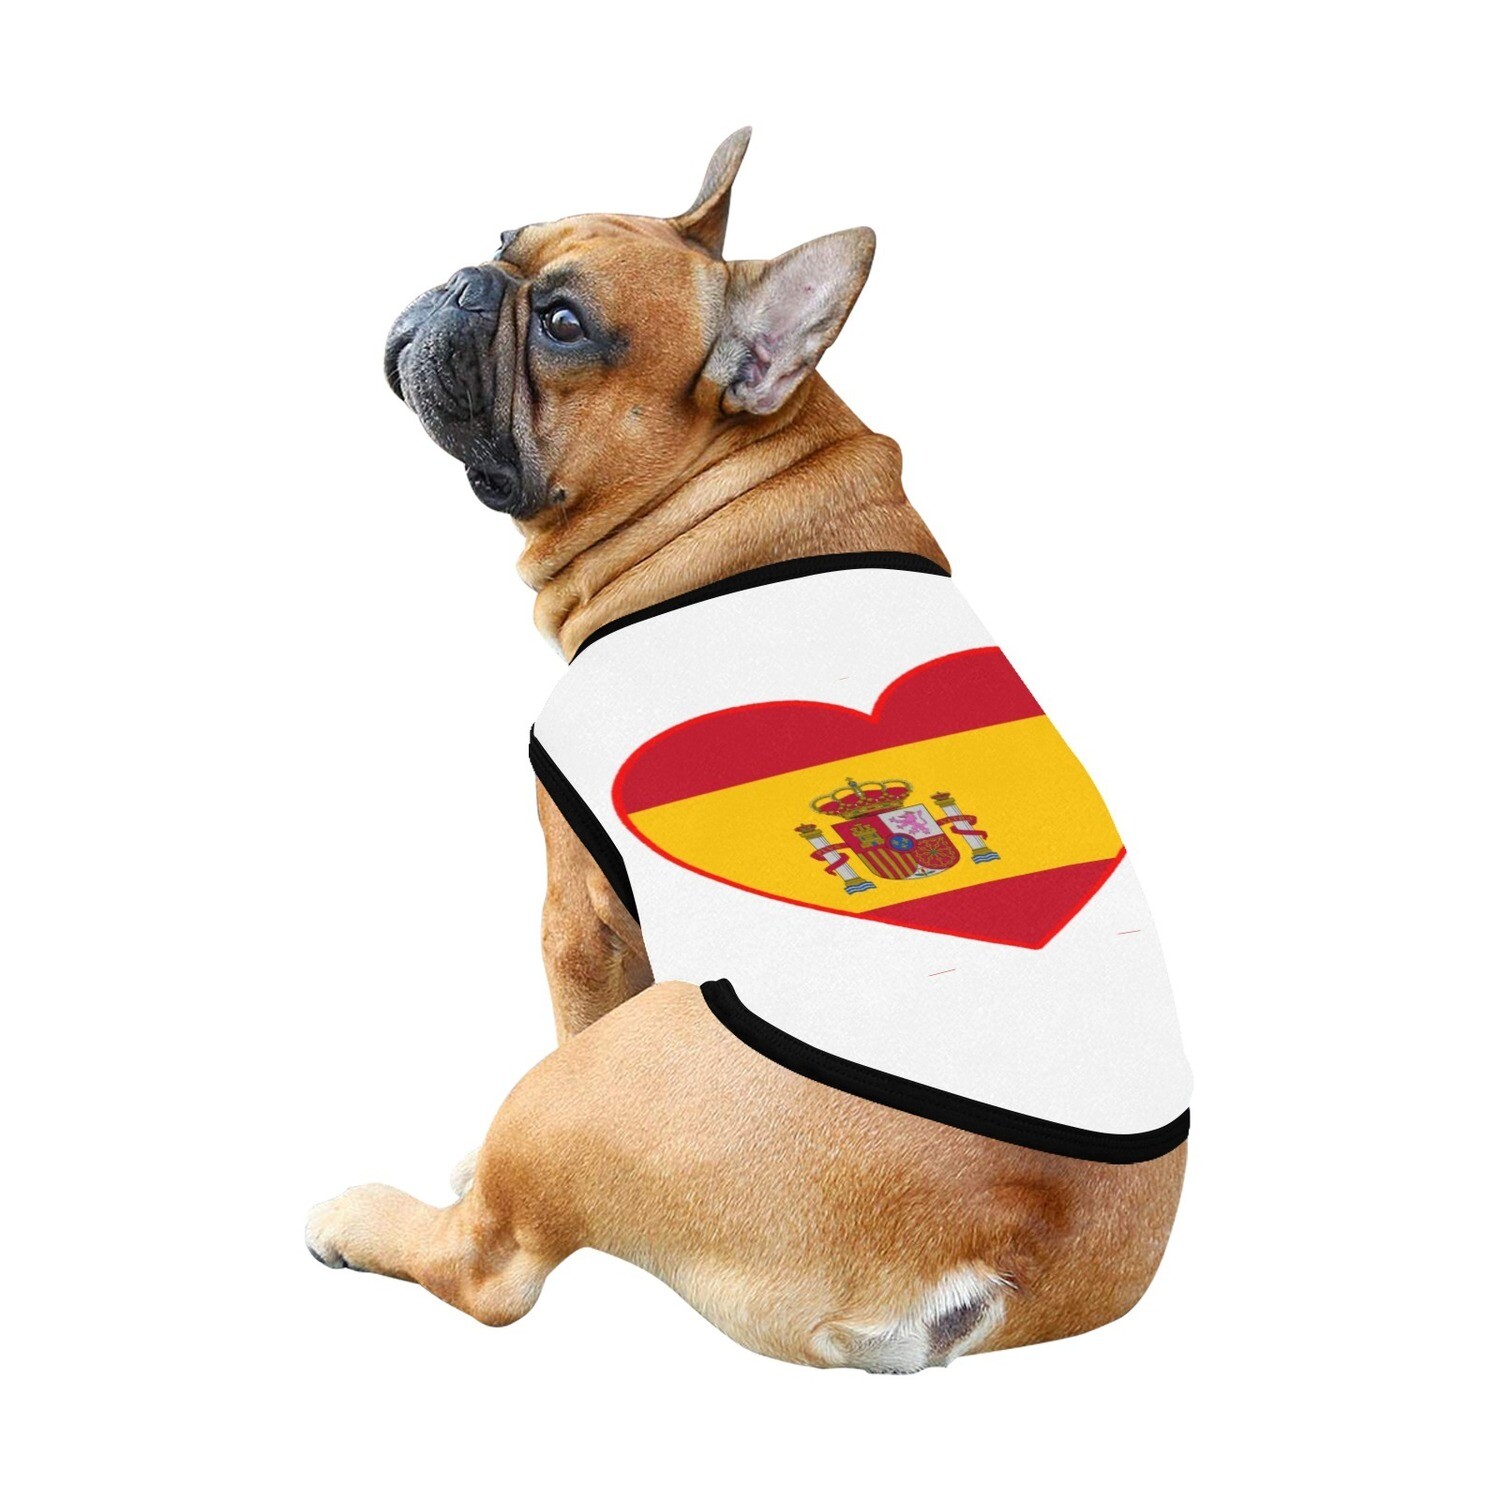 🐕🇪🇸I love Spain, Spanish flag, dog t-shirt, dog gift, dog tank top, dog shirt, dog clothes, gift, 7 sizes XS to 3XL, heart shape, white